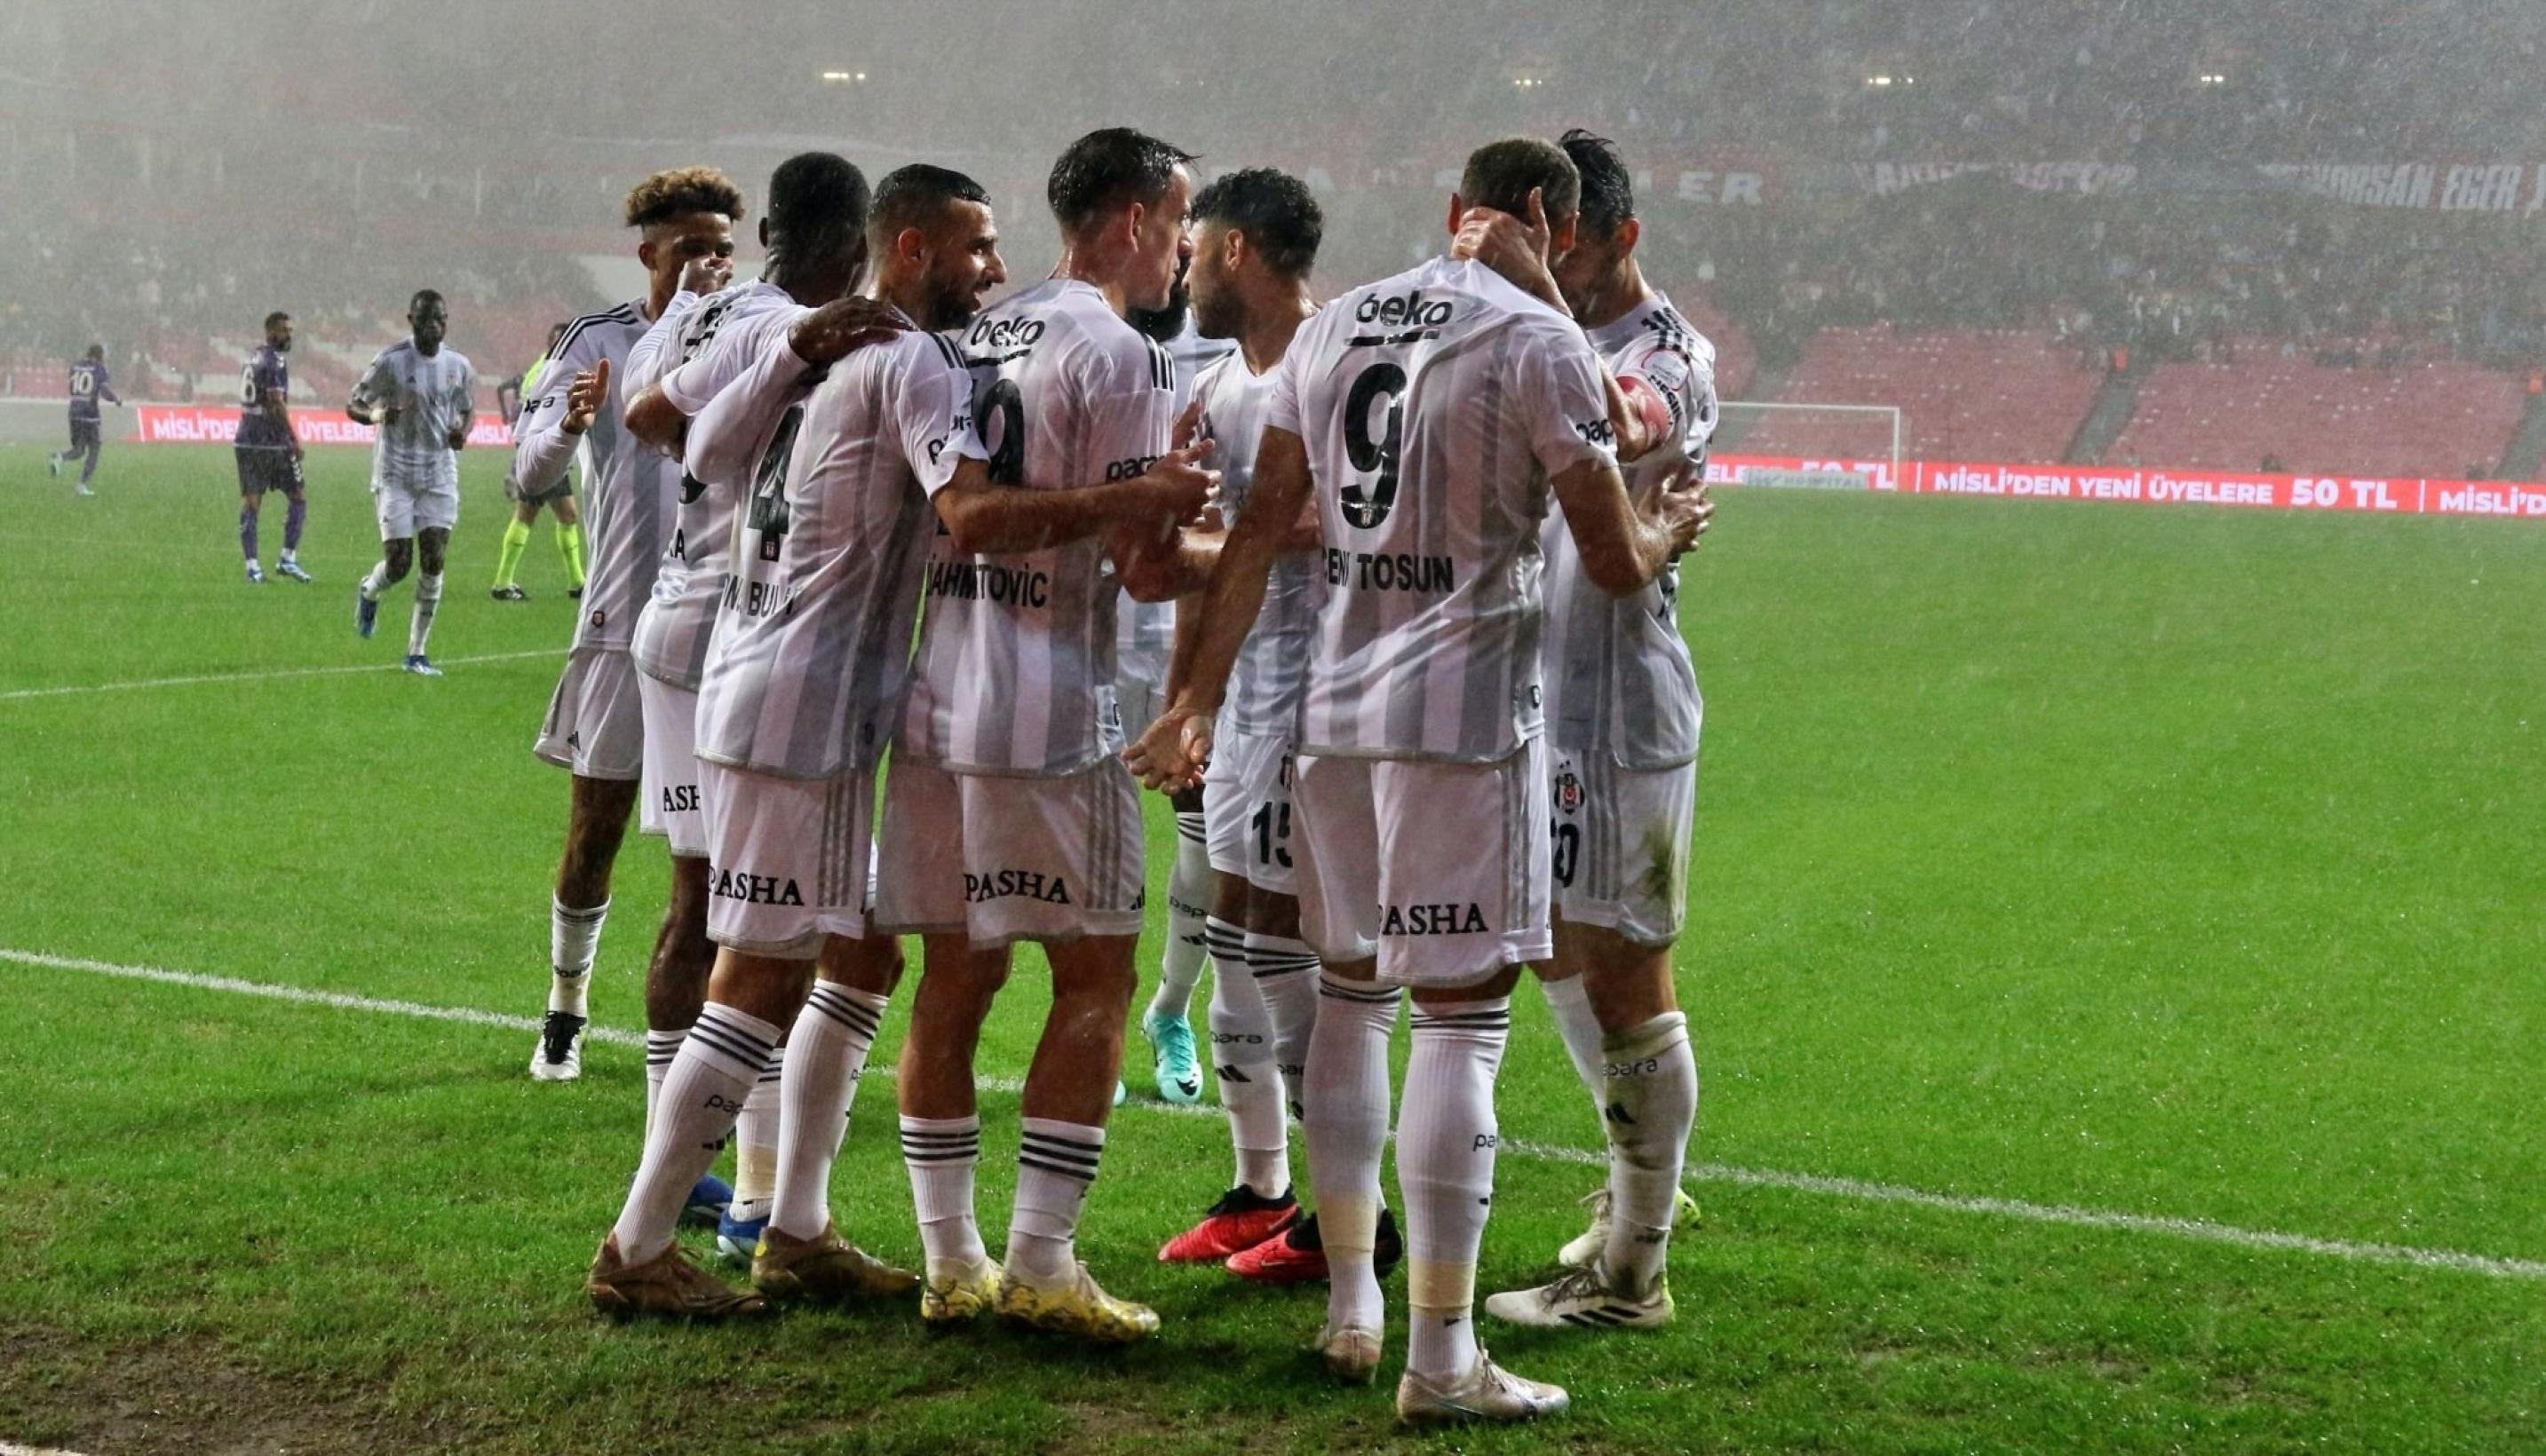 HL Süper Lig - Samsunspor 1 - 2 Besiktas